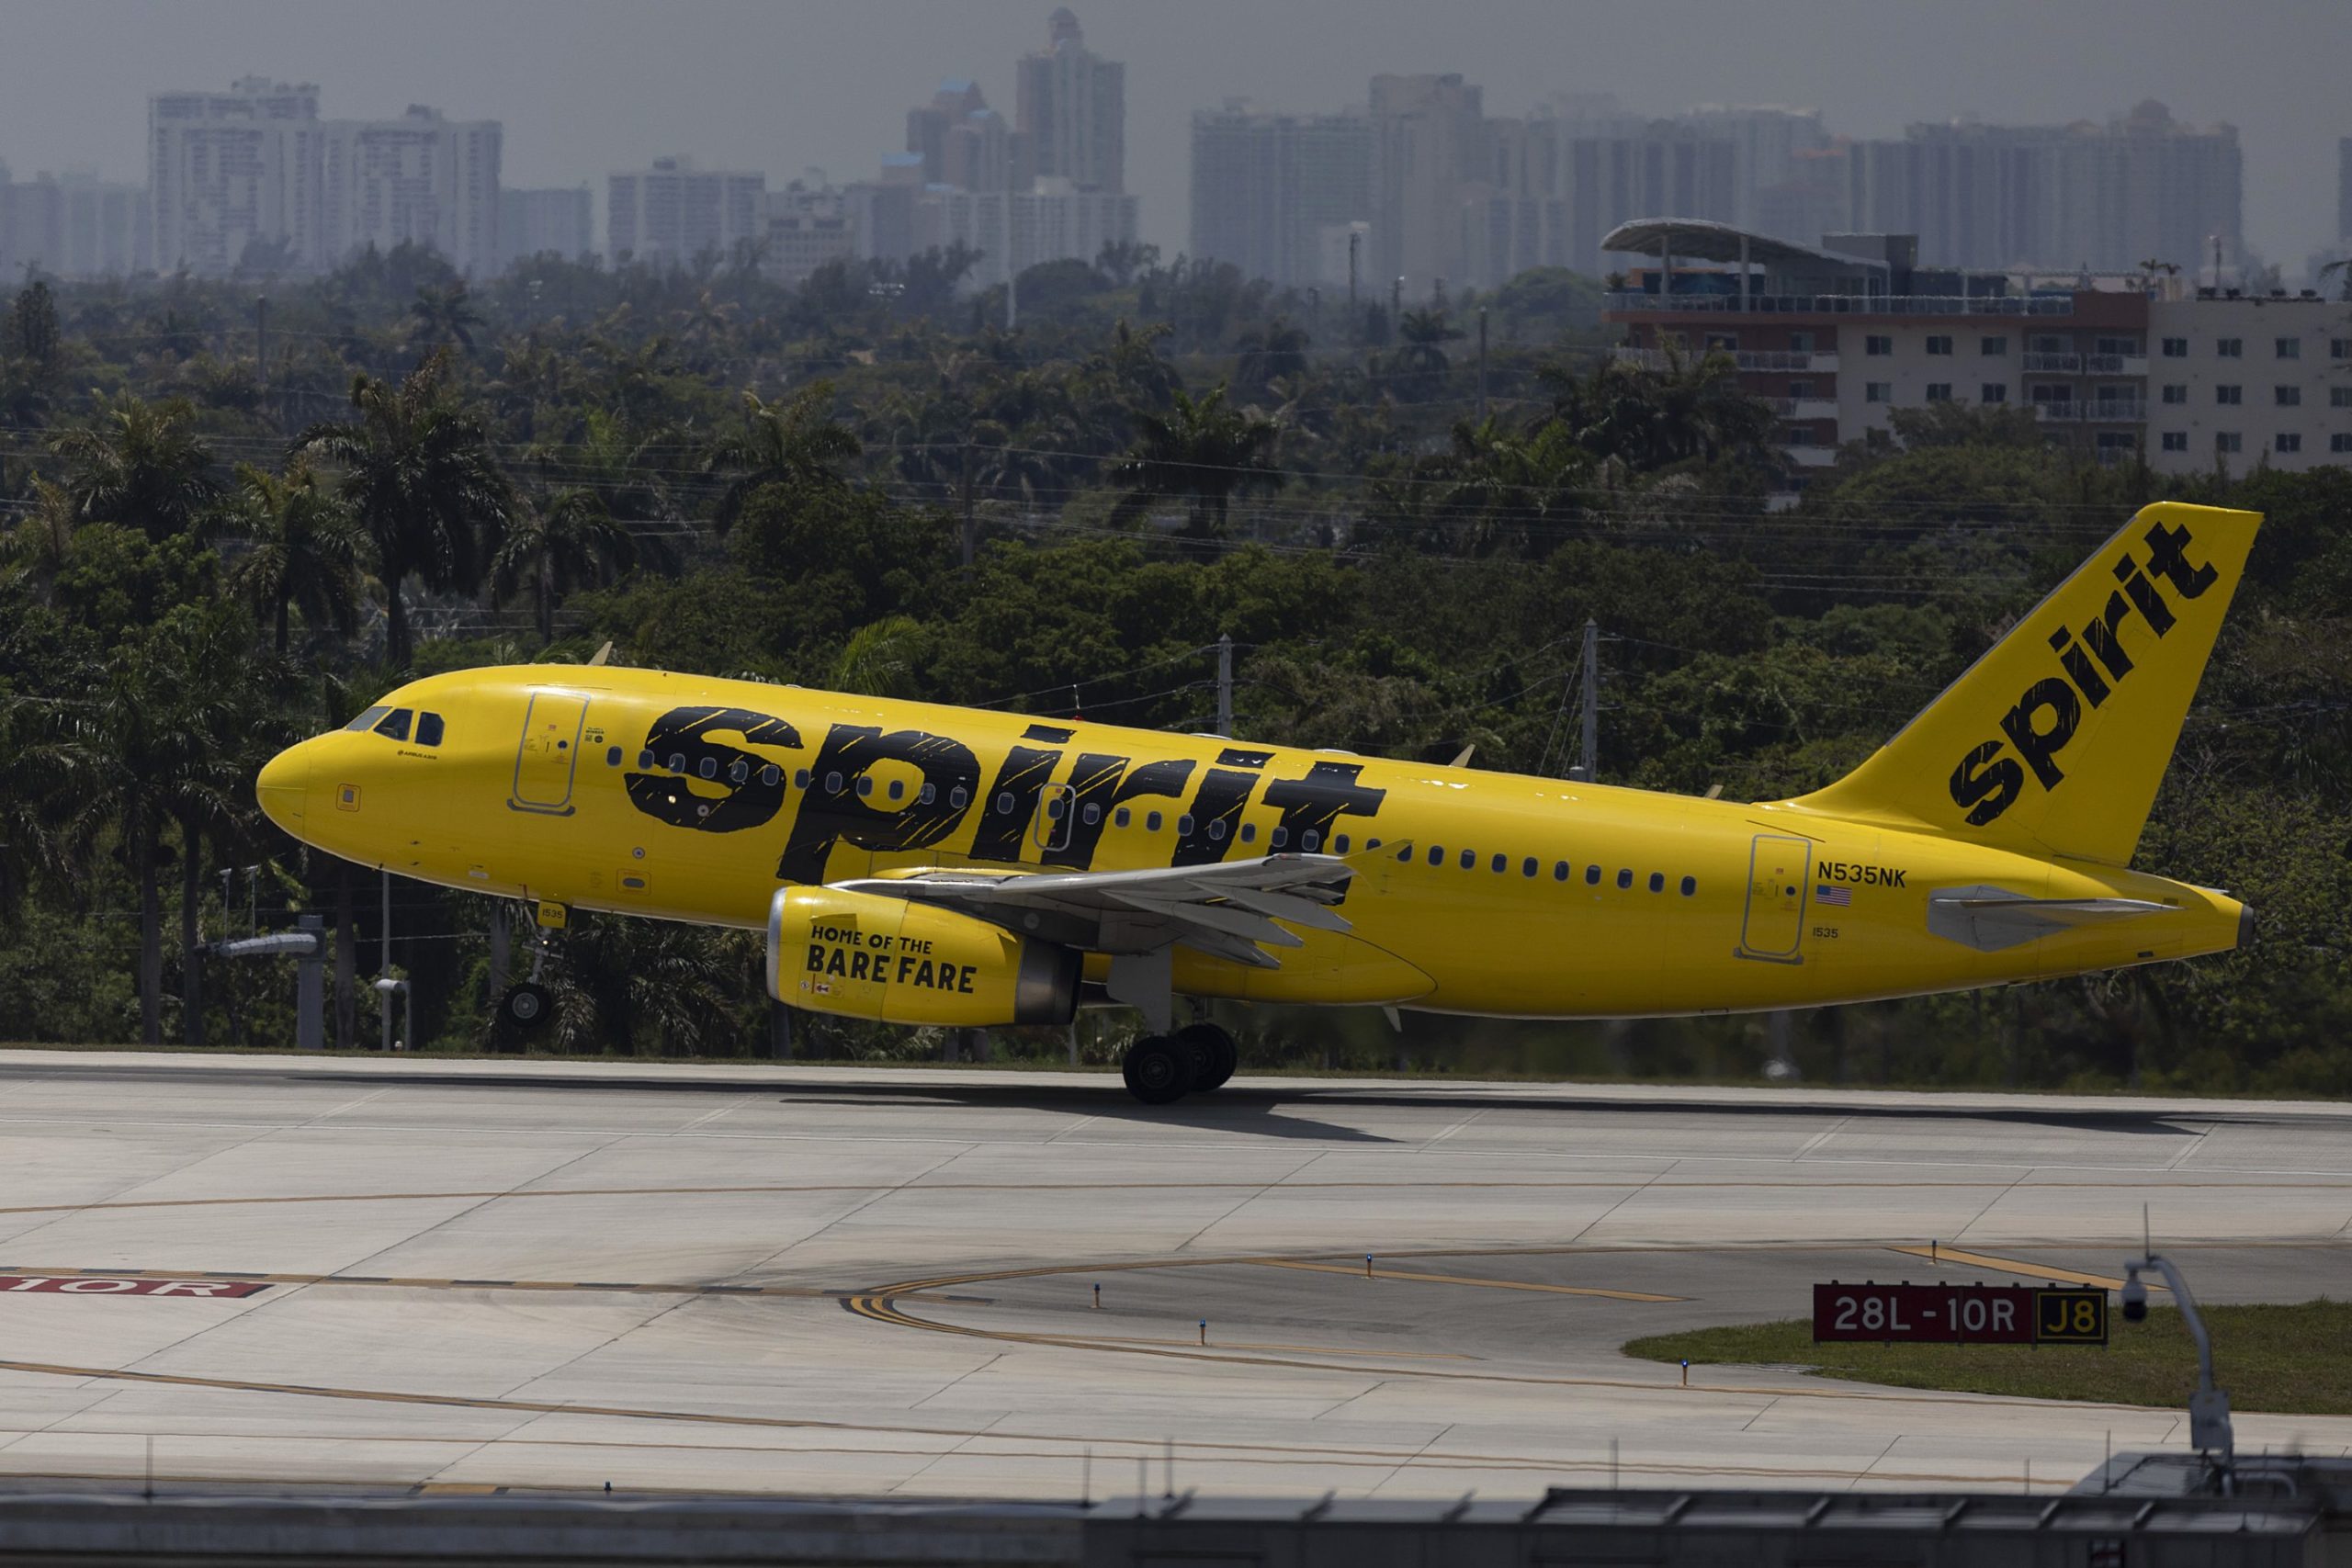 Spirit delays shareholder vote to June 30 after JetBlue raises takeover bid to $3.4 billion